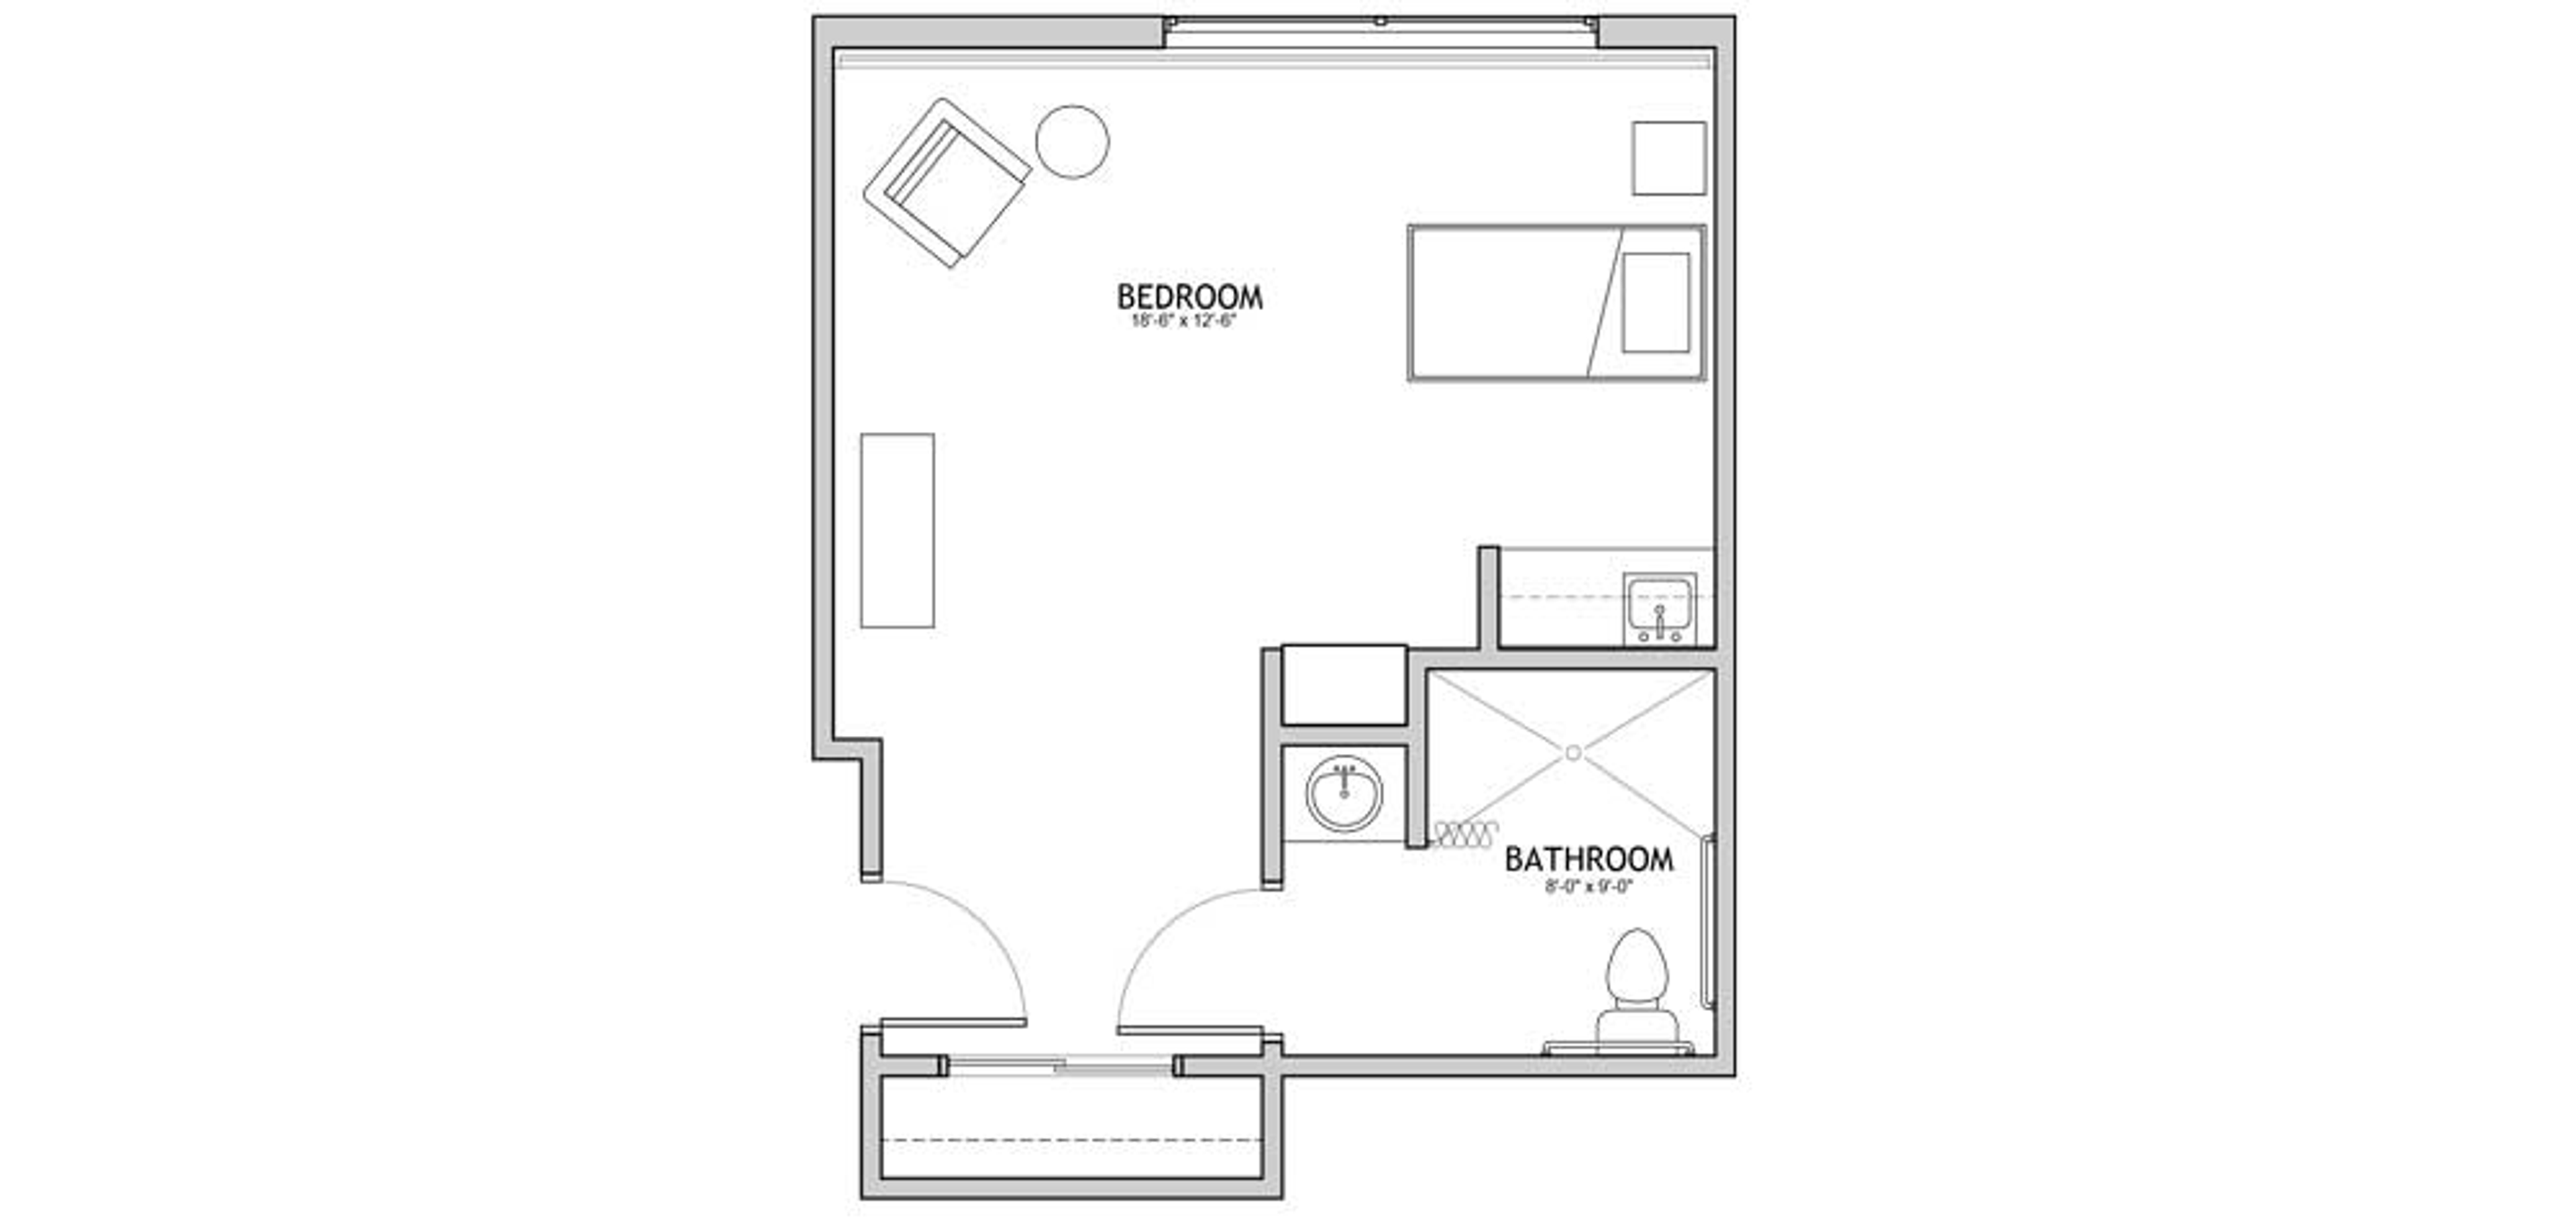 Floorplan - The Auberge at Oak Village - 1 bed, 1 bath, 428 sq. ft. Memory Care